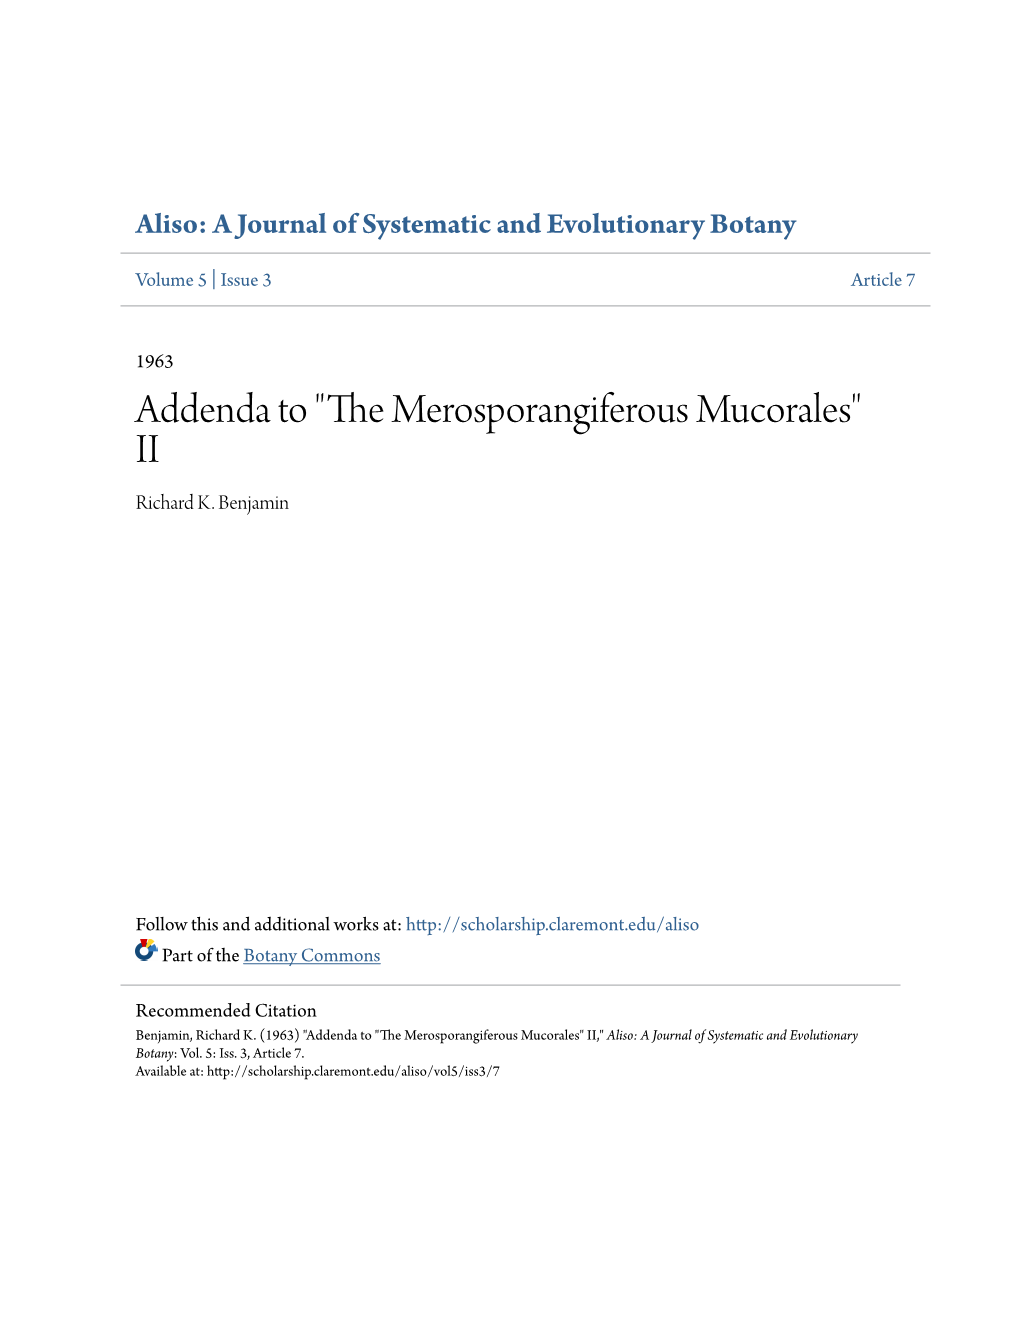 Addenda to "The Merosporangiferous Mucorales" Ii